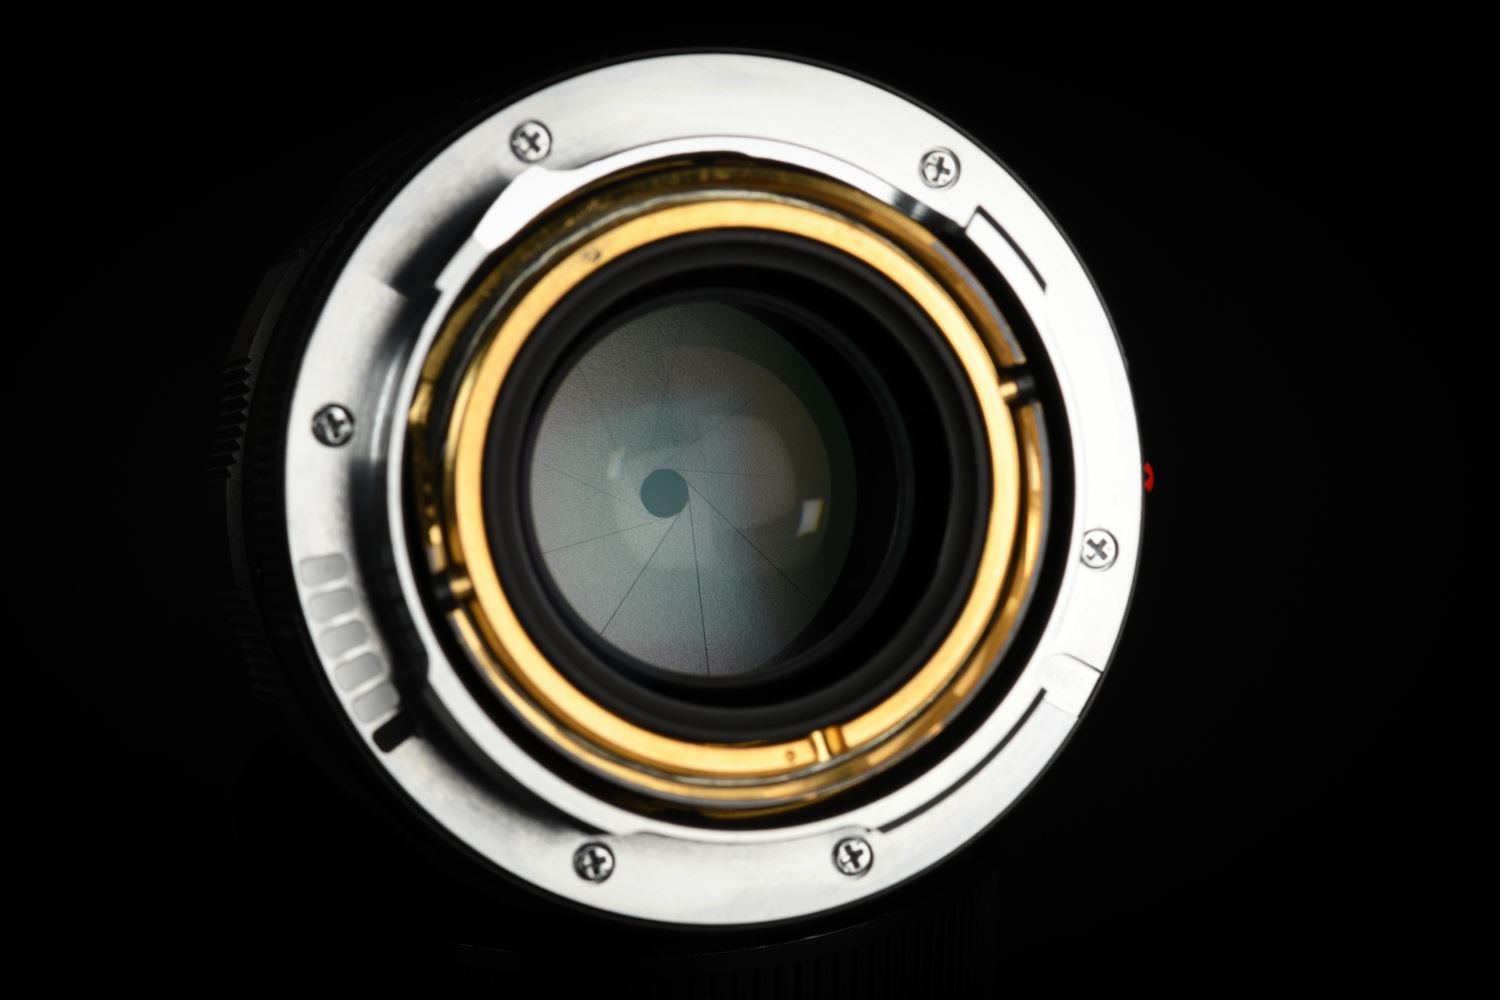 Picture of Leica Summilux-M 50mm f/1.4 ASPH E43 Black Chrome